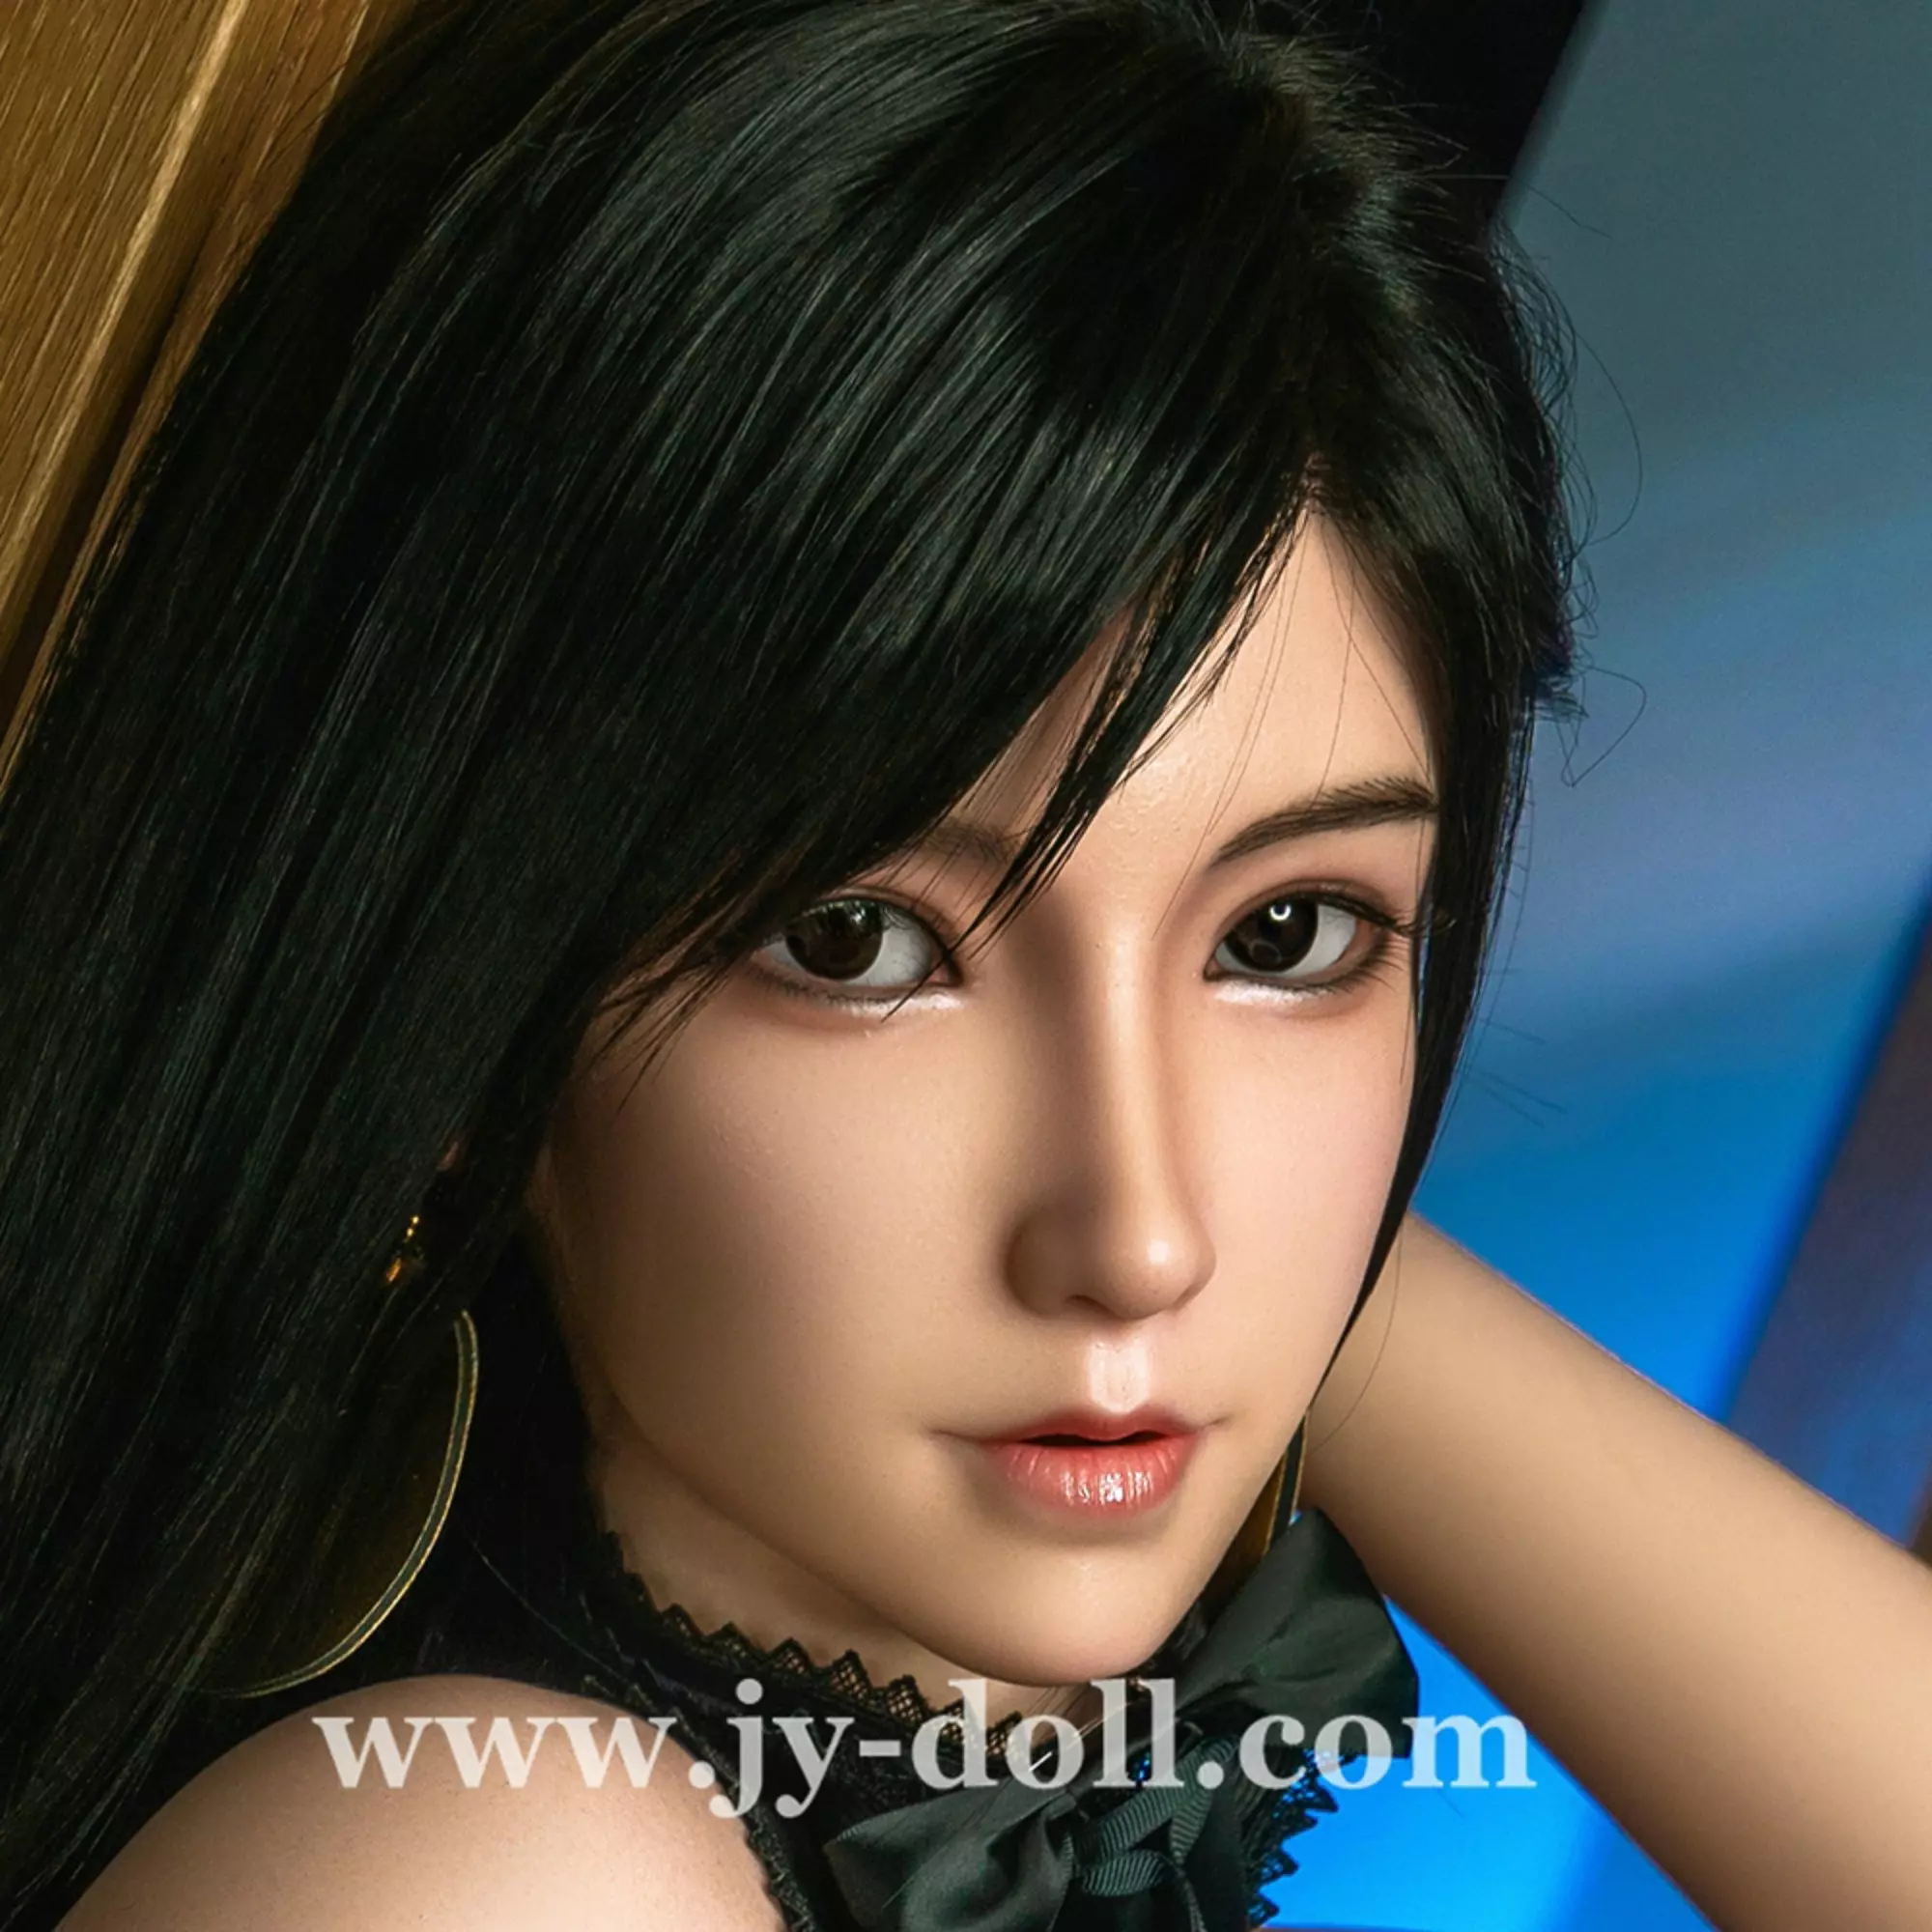 JY Doll silicone sex doll head Annie, removable jaw